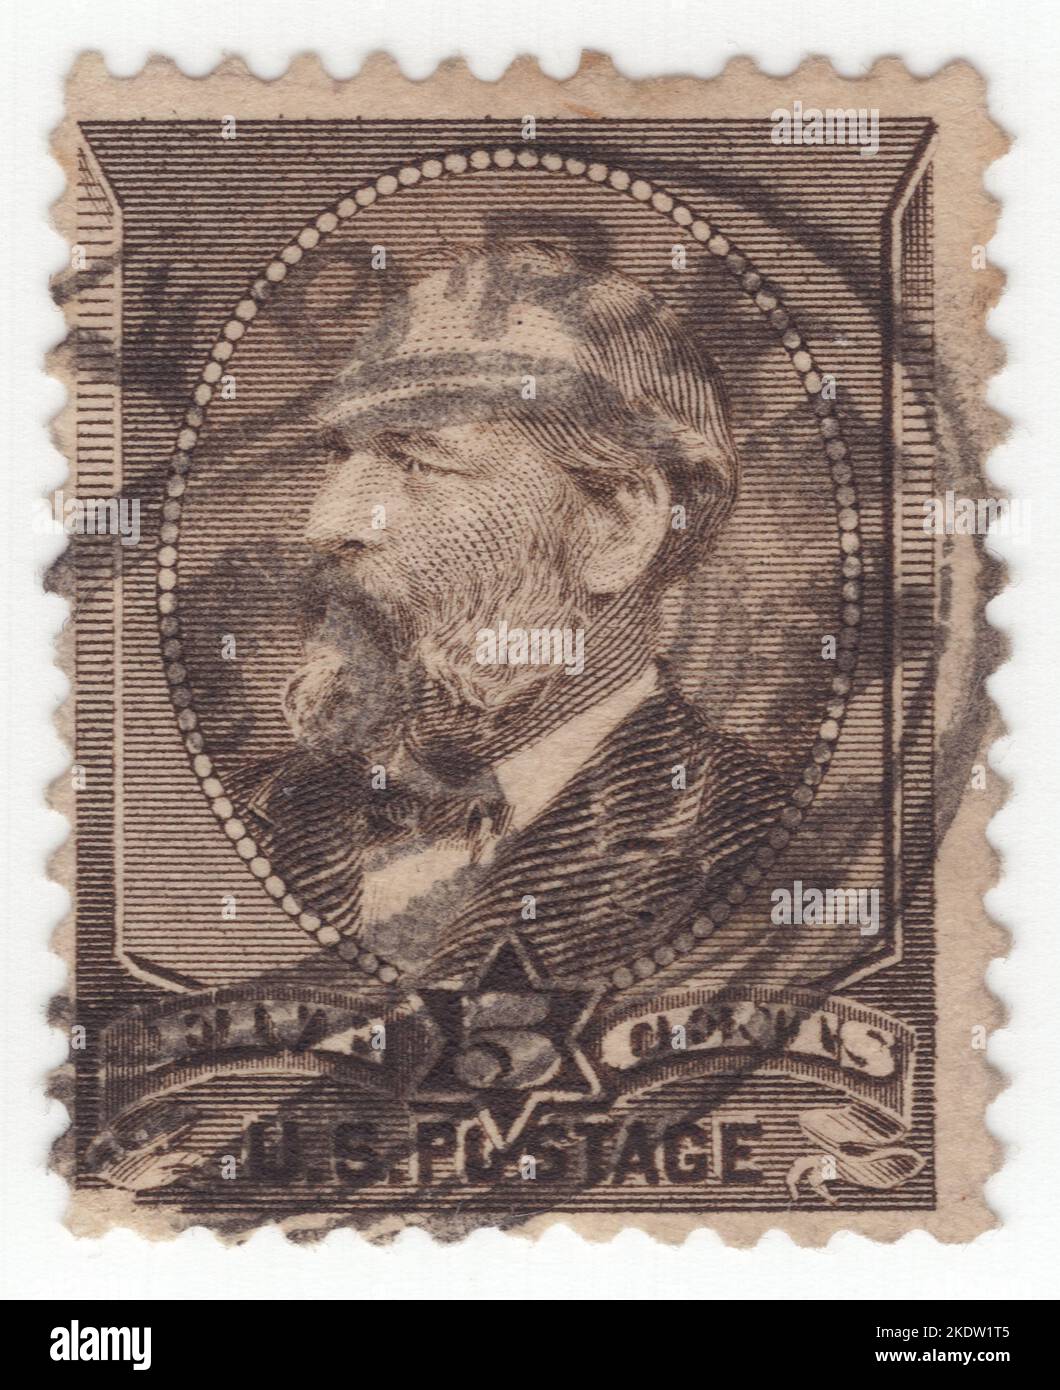 Ohio Statehood Stamps — Little Postage House